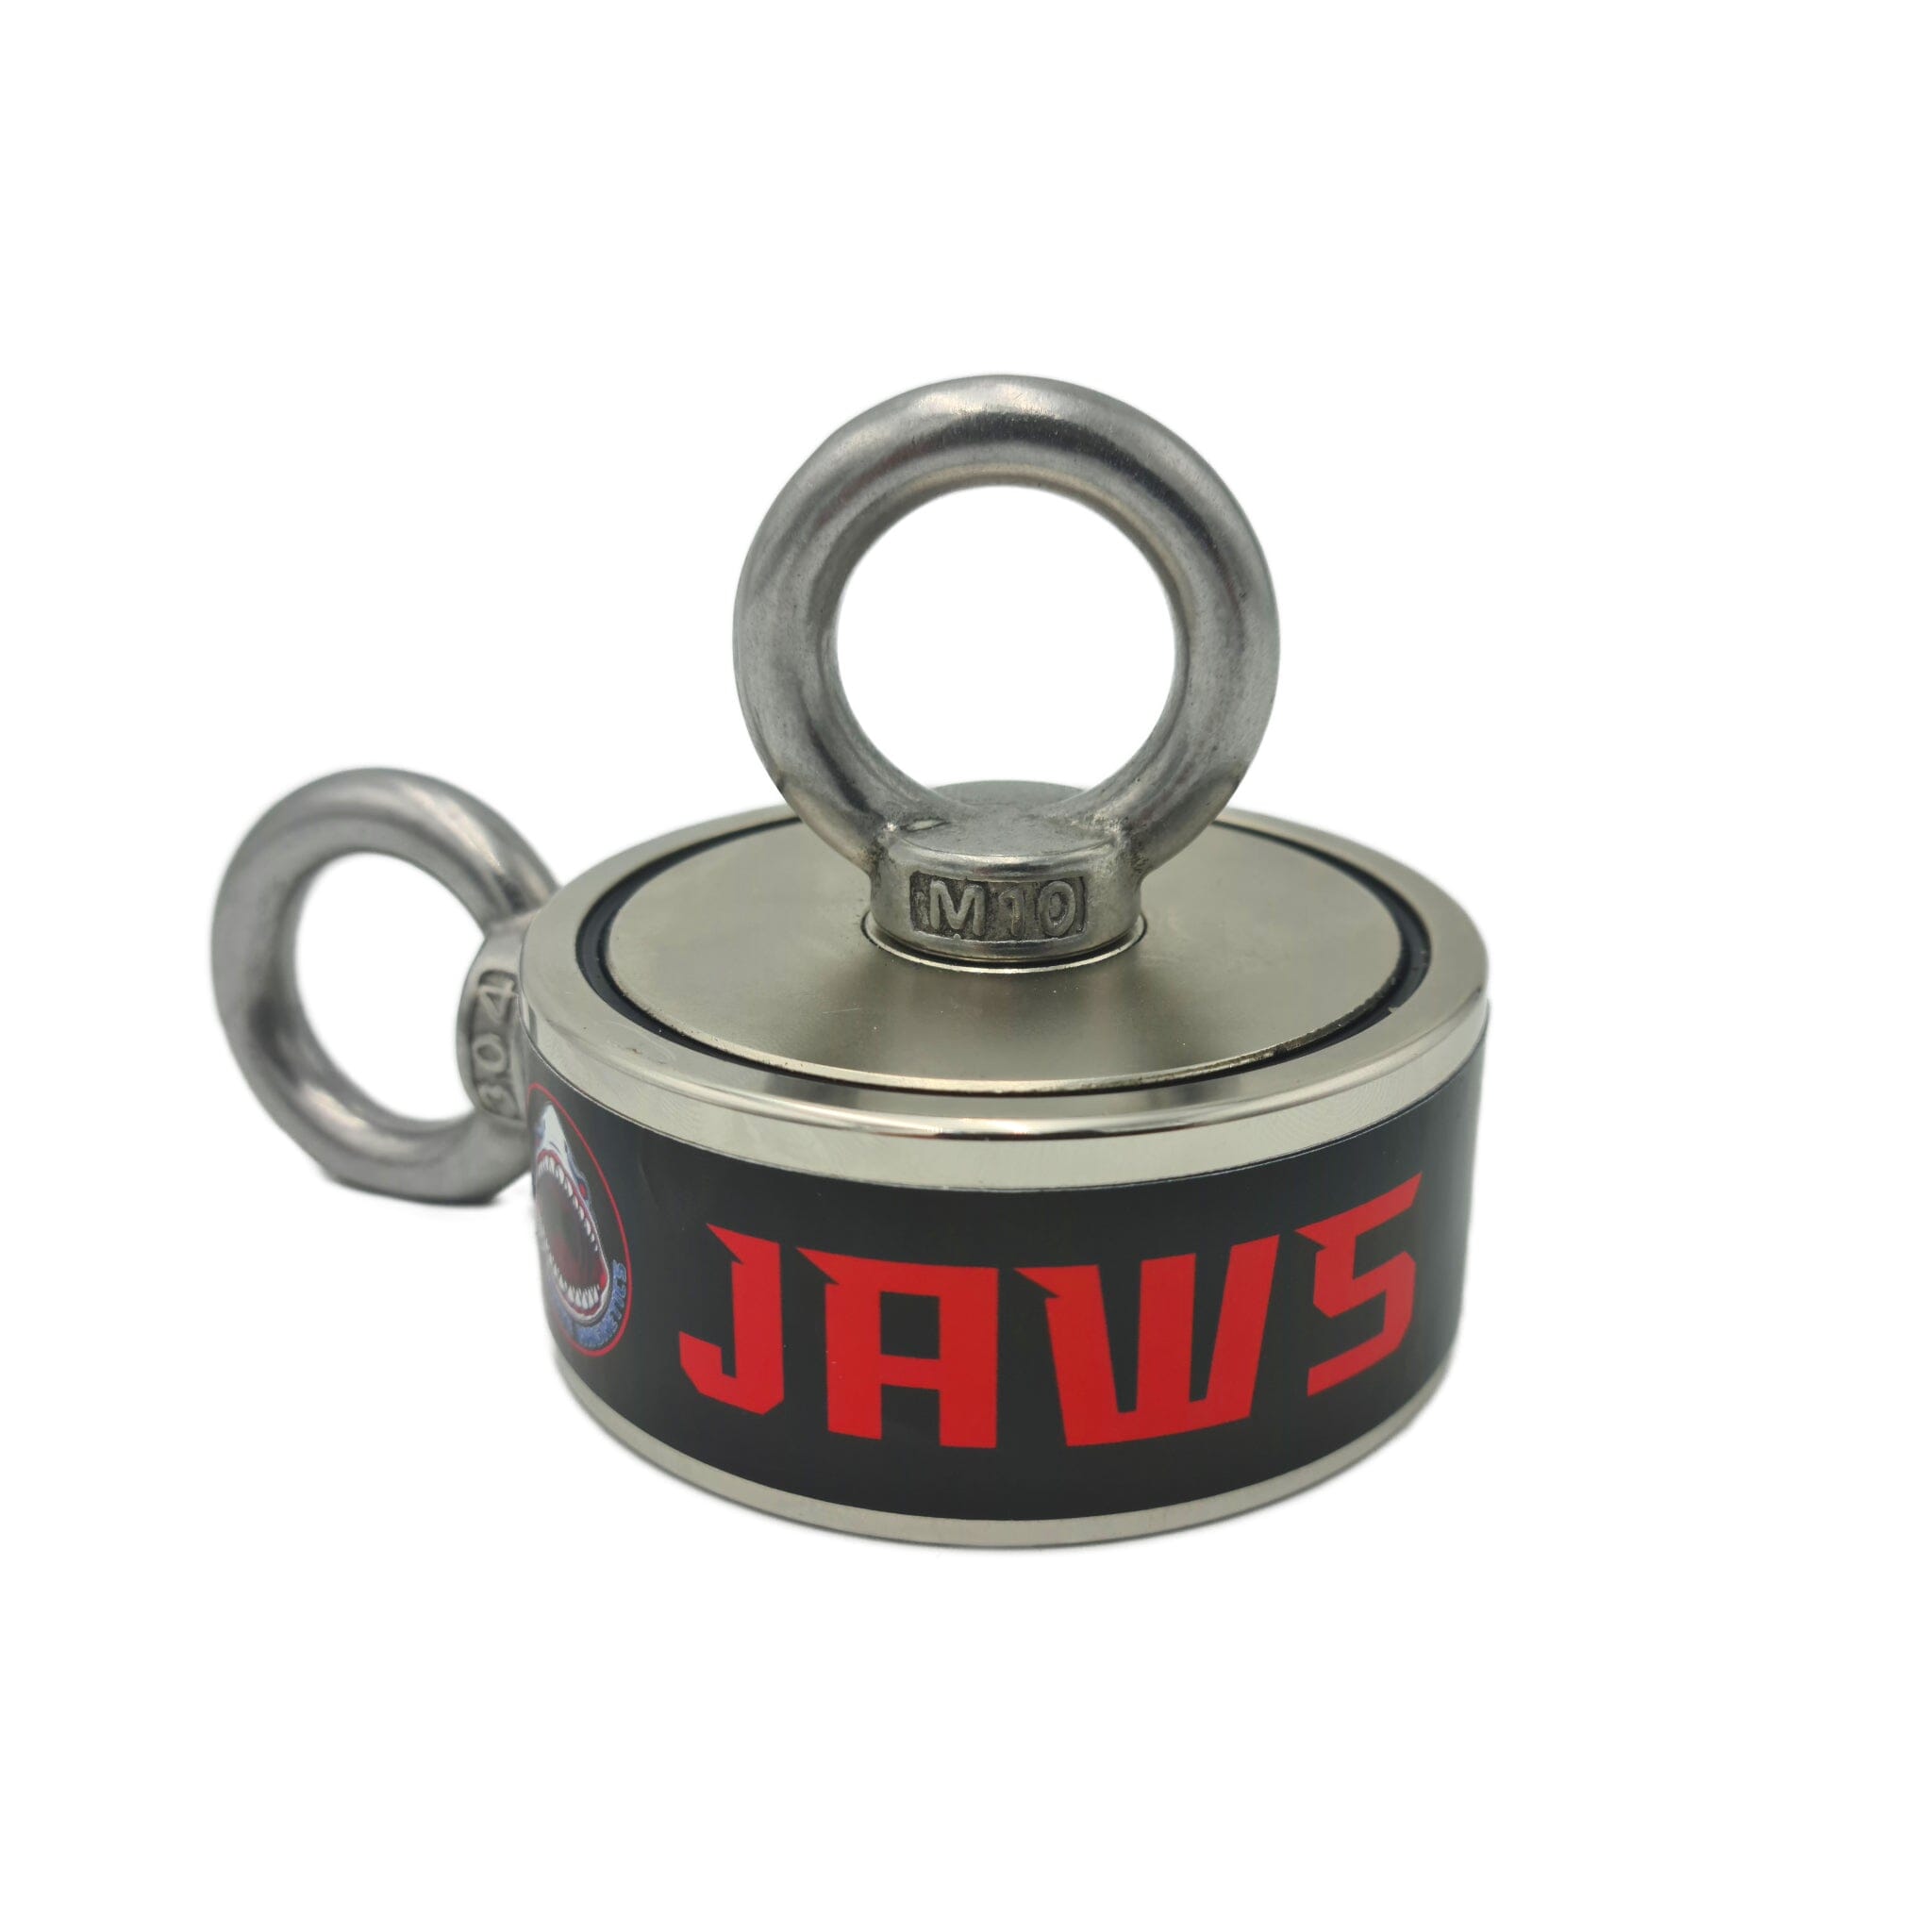 JAWS - 1,200 LB Deluxe Magnet Fishing Kit